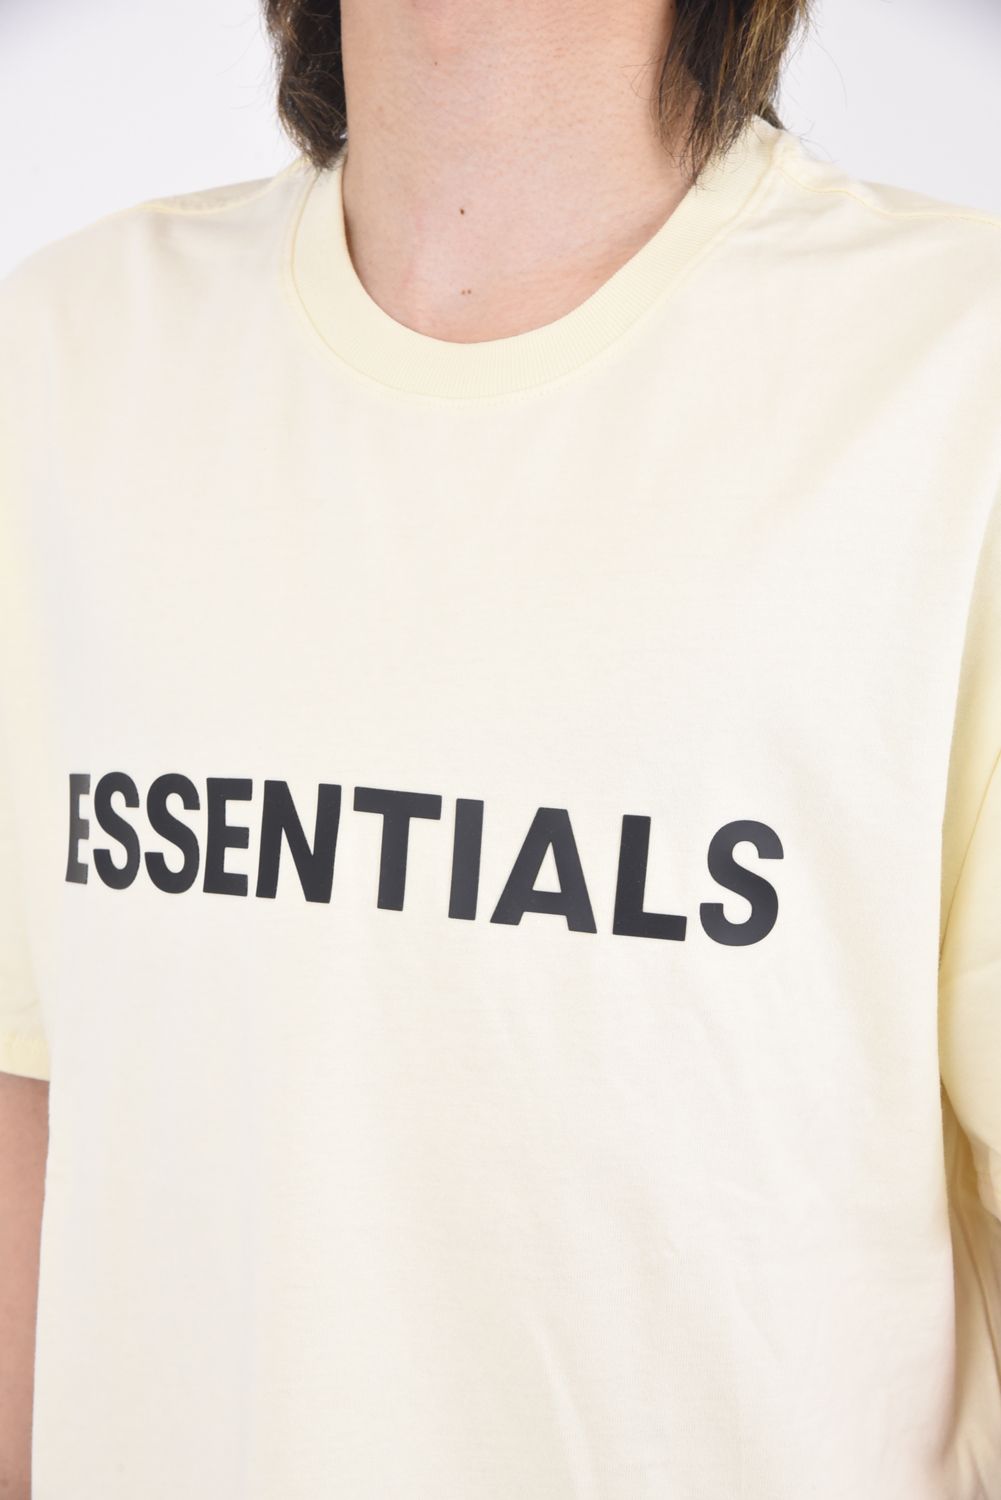 ESSENTIALS FRONT LOGO T-Shirt / フロント ロゴ 半袖 Tシャツ クリーム - S